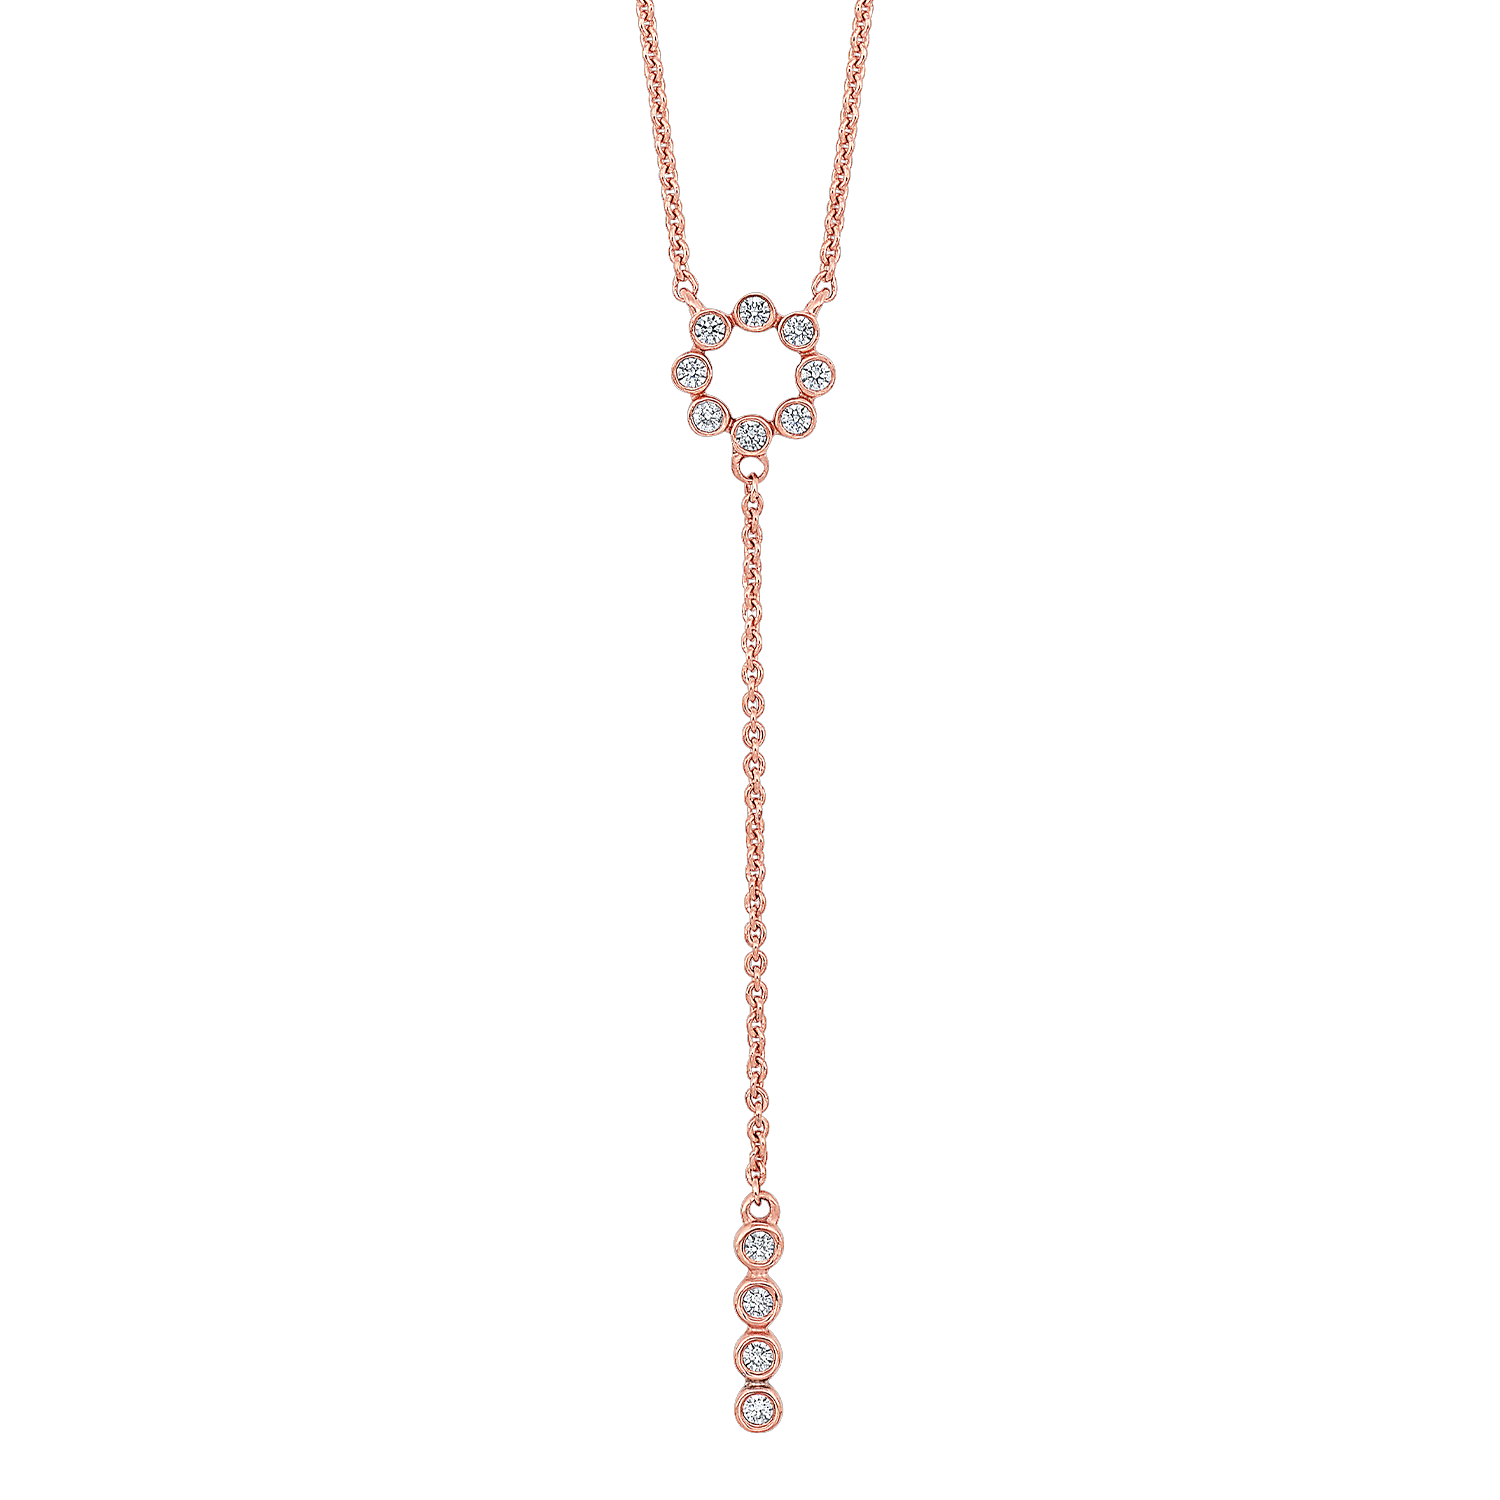 BW James Jewelers Pendant 16 Page Christmas Catalog Offer 14K Diamond Pendant 1/6ctw